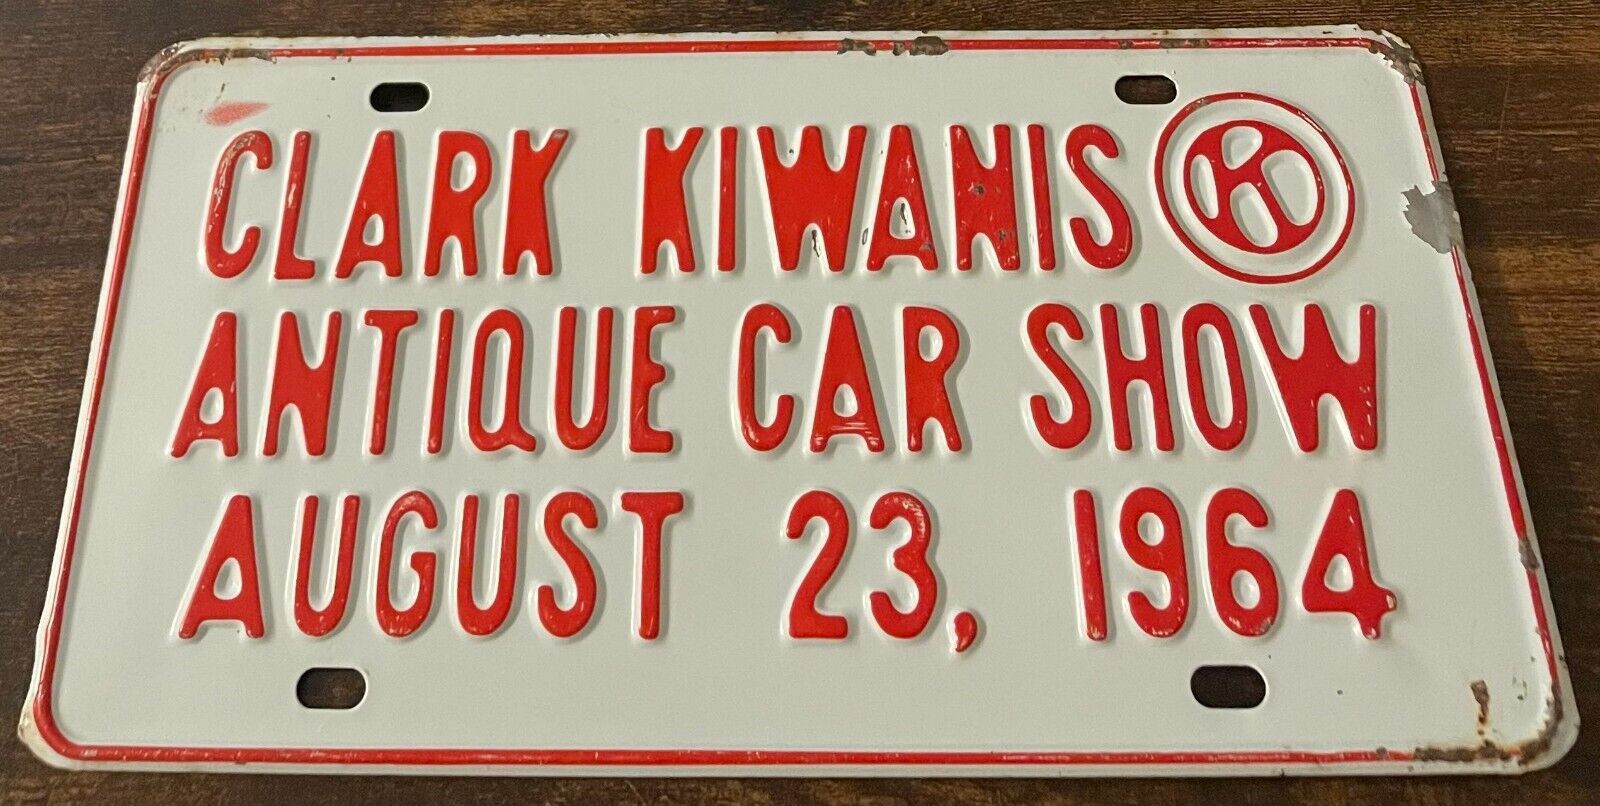 1964 Clark Kiwanis Antique Car Show Booster License Plate STEEL